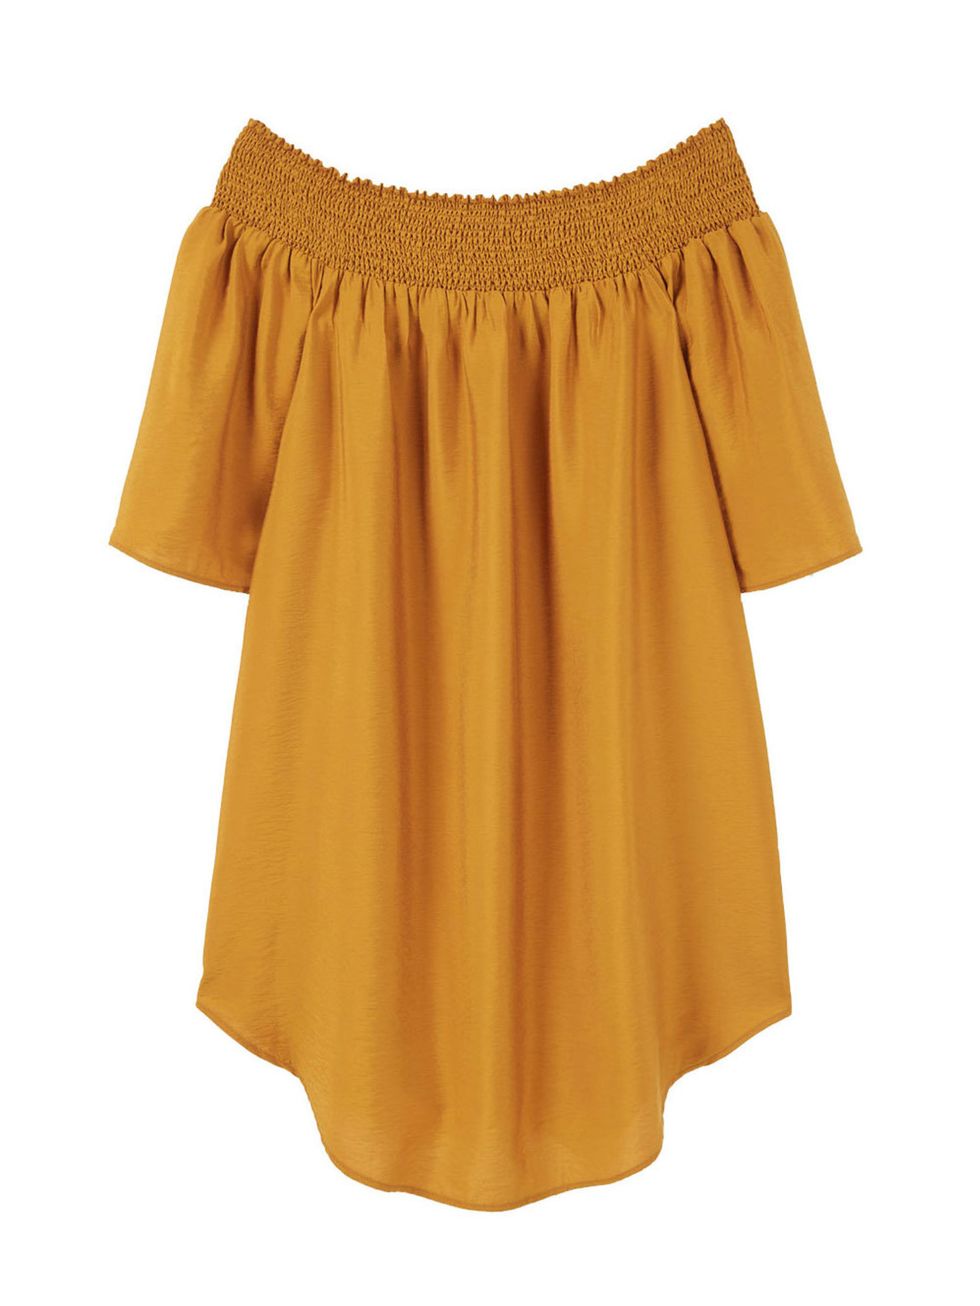 Product, Brown, Yellow, Orange, Amber, One-piece garment, Fashion, Khaki, Day dress, Tan, 